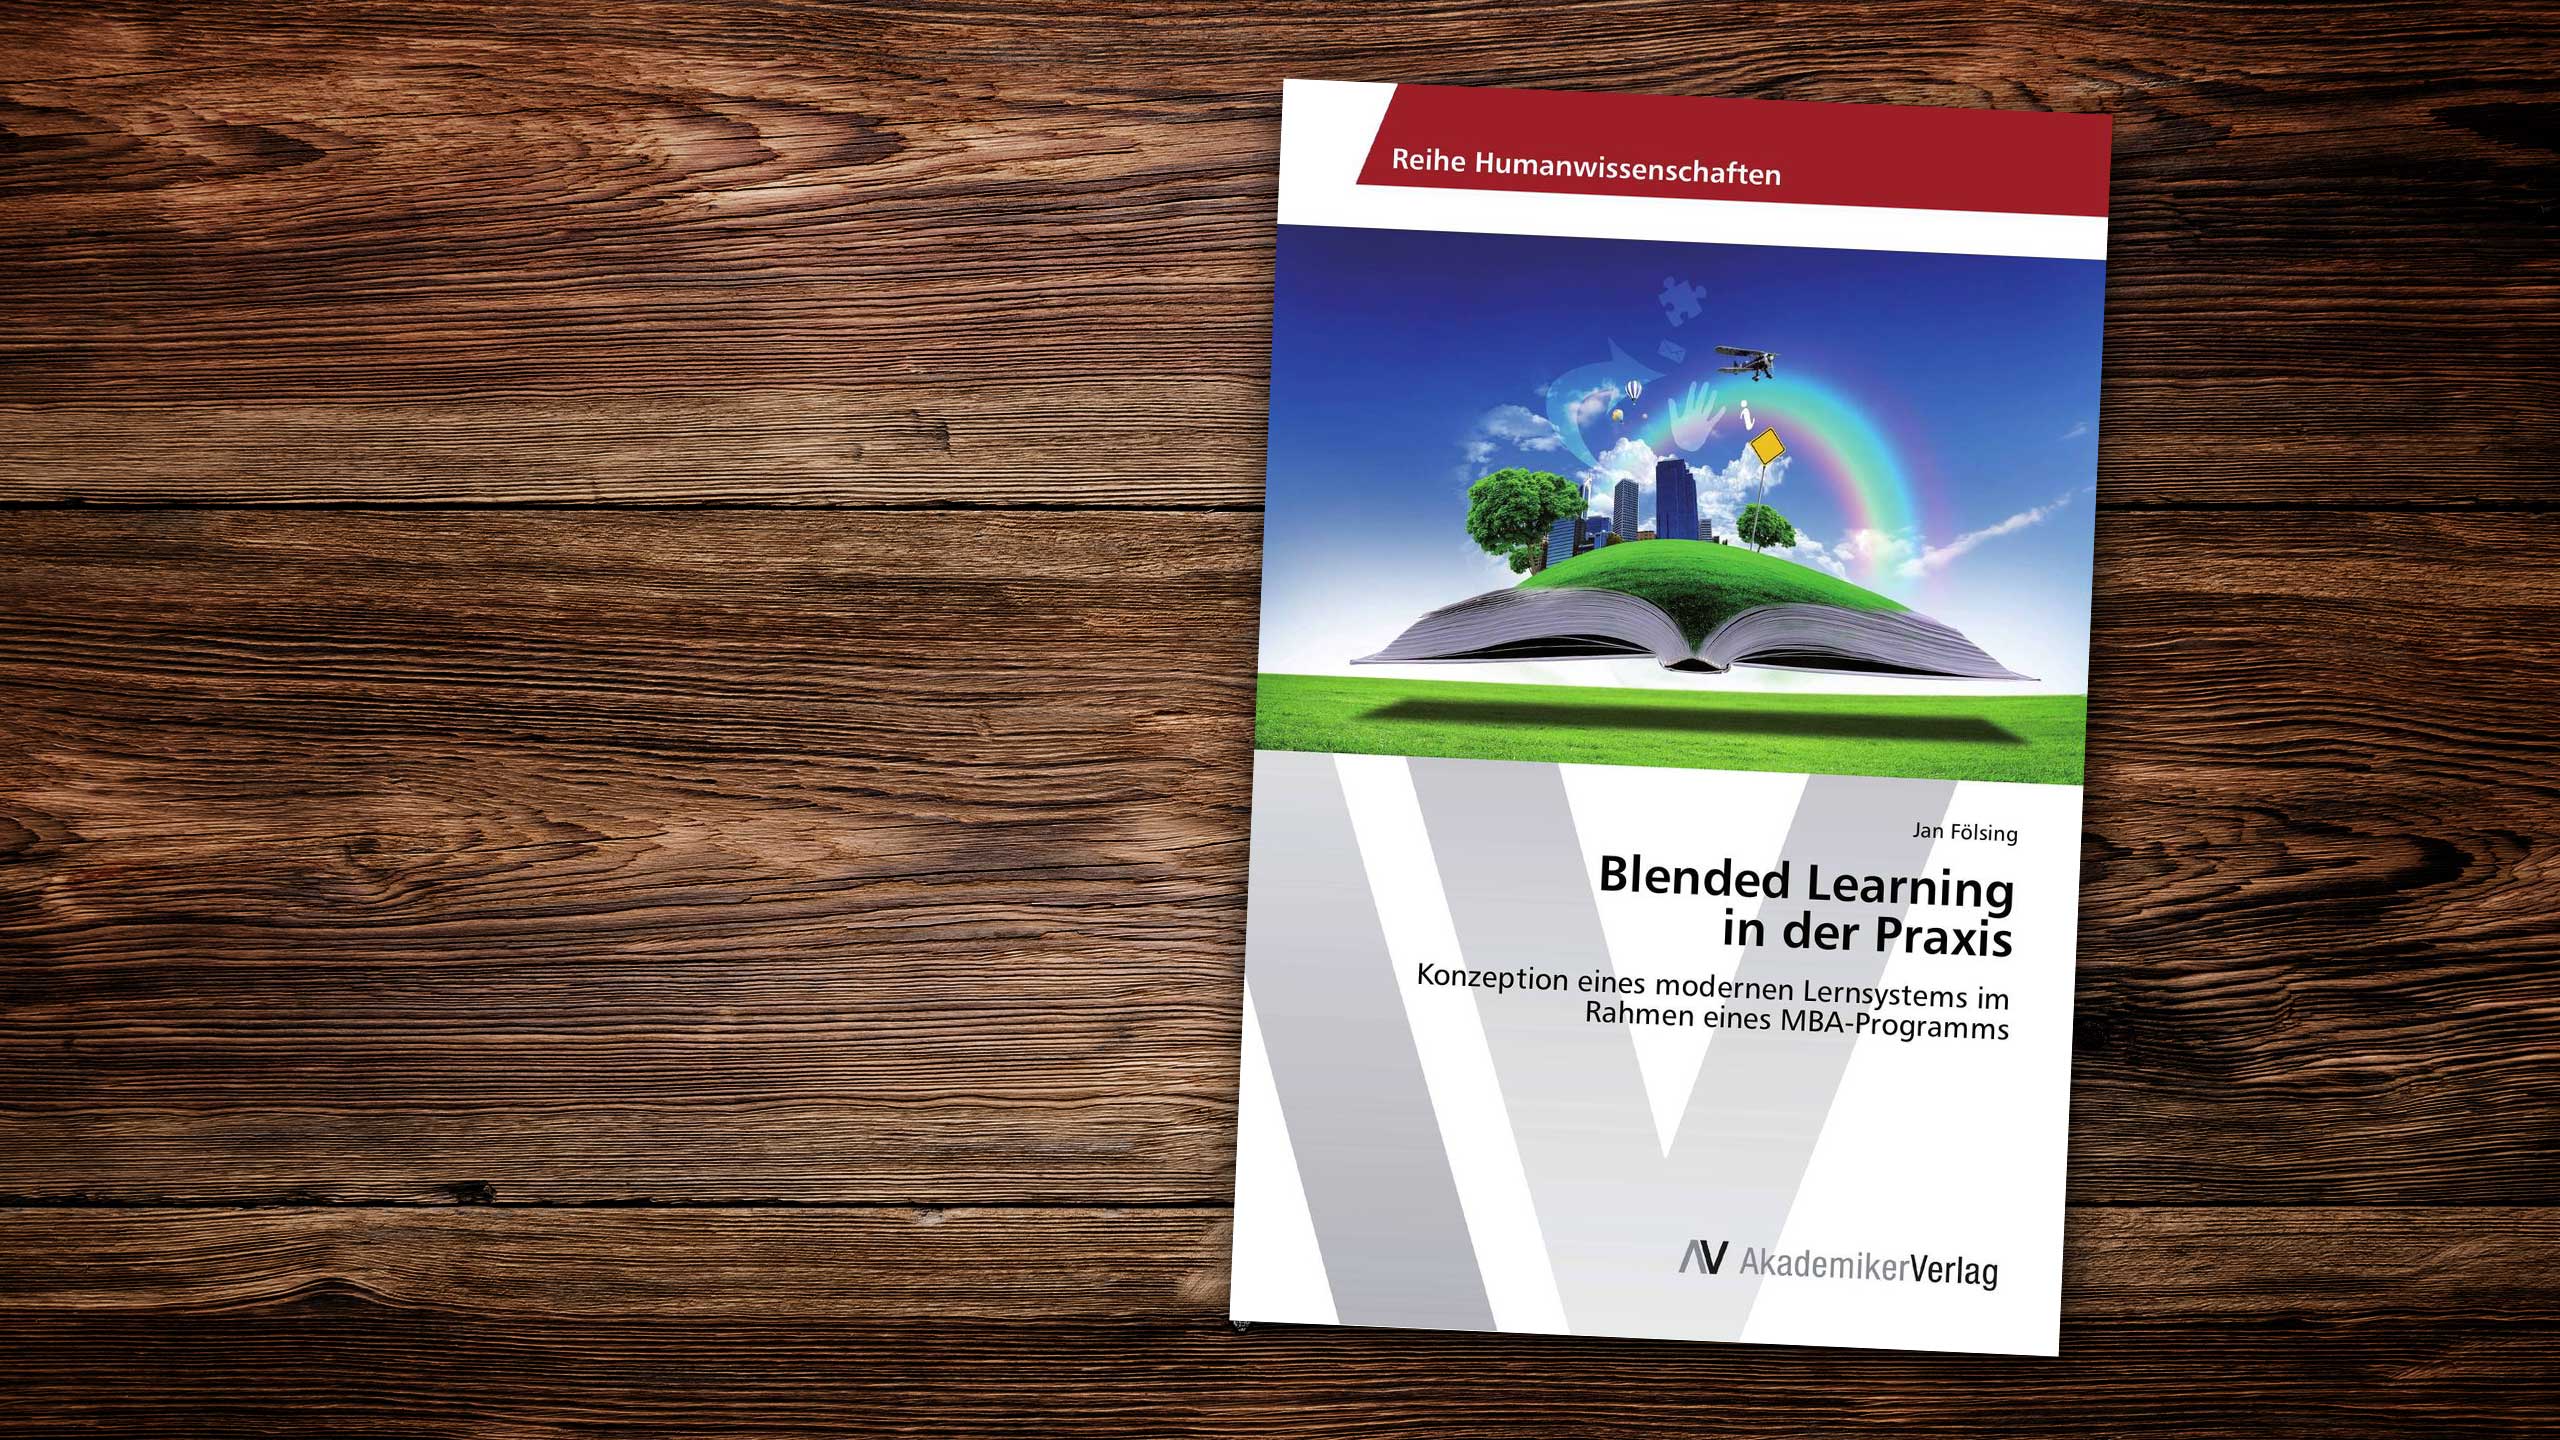 EnjoyWork LeseLust: Blended Learning in der Praxis - Konzeption eines modernen Lernsystems im Rahmen eines MBA-Programms. Foto: copy Jan Foelsing / Akademikerverlag